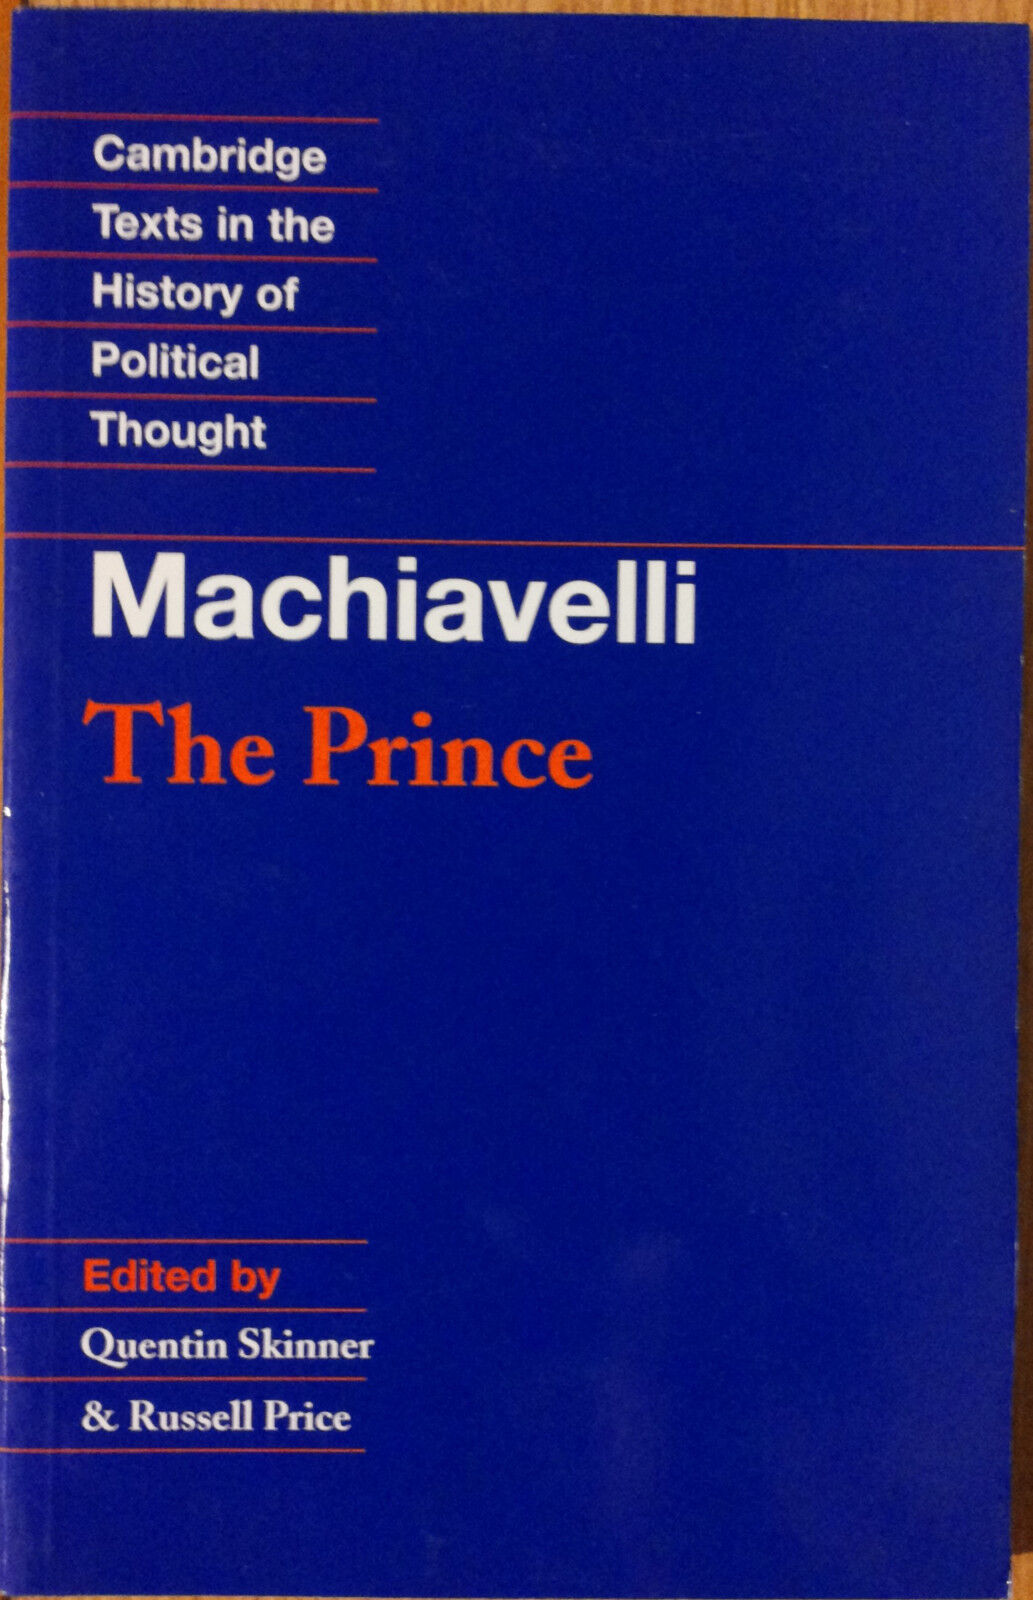 Machiavelli: The Prince - Skinner, Price - Cambridge University Press,2014 - R libro usato